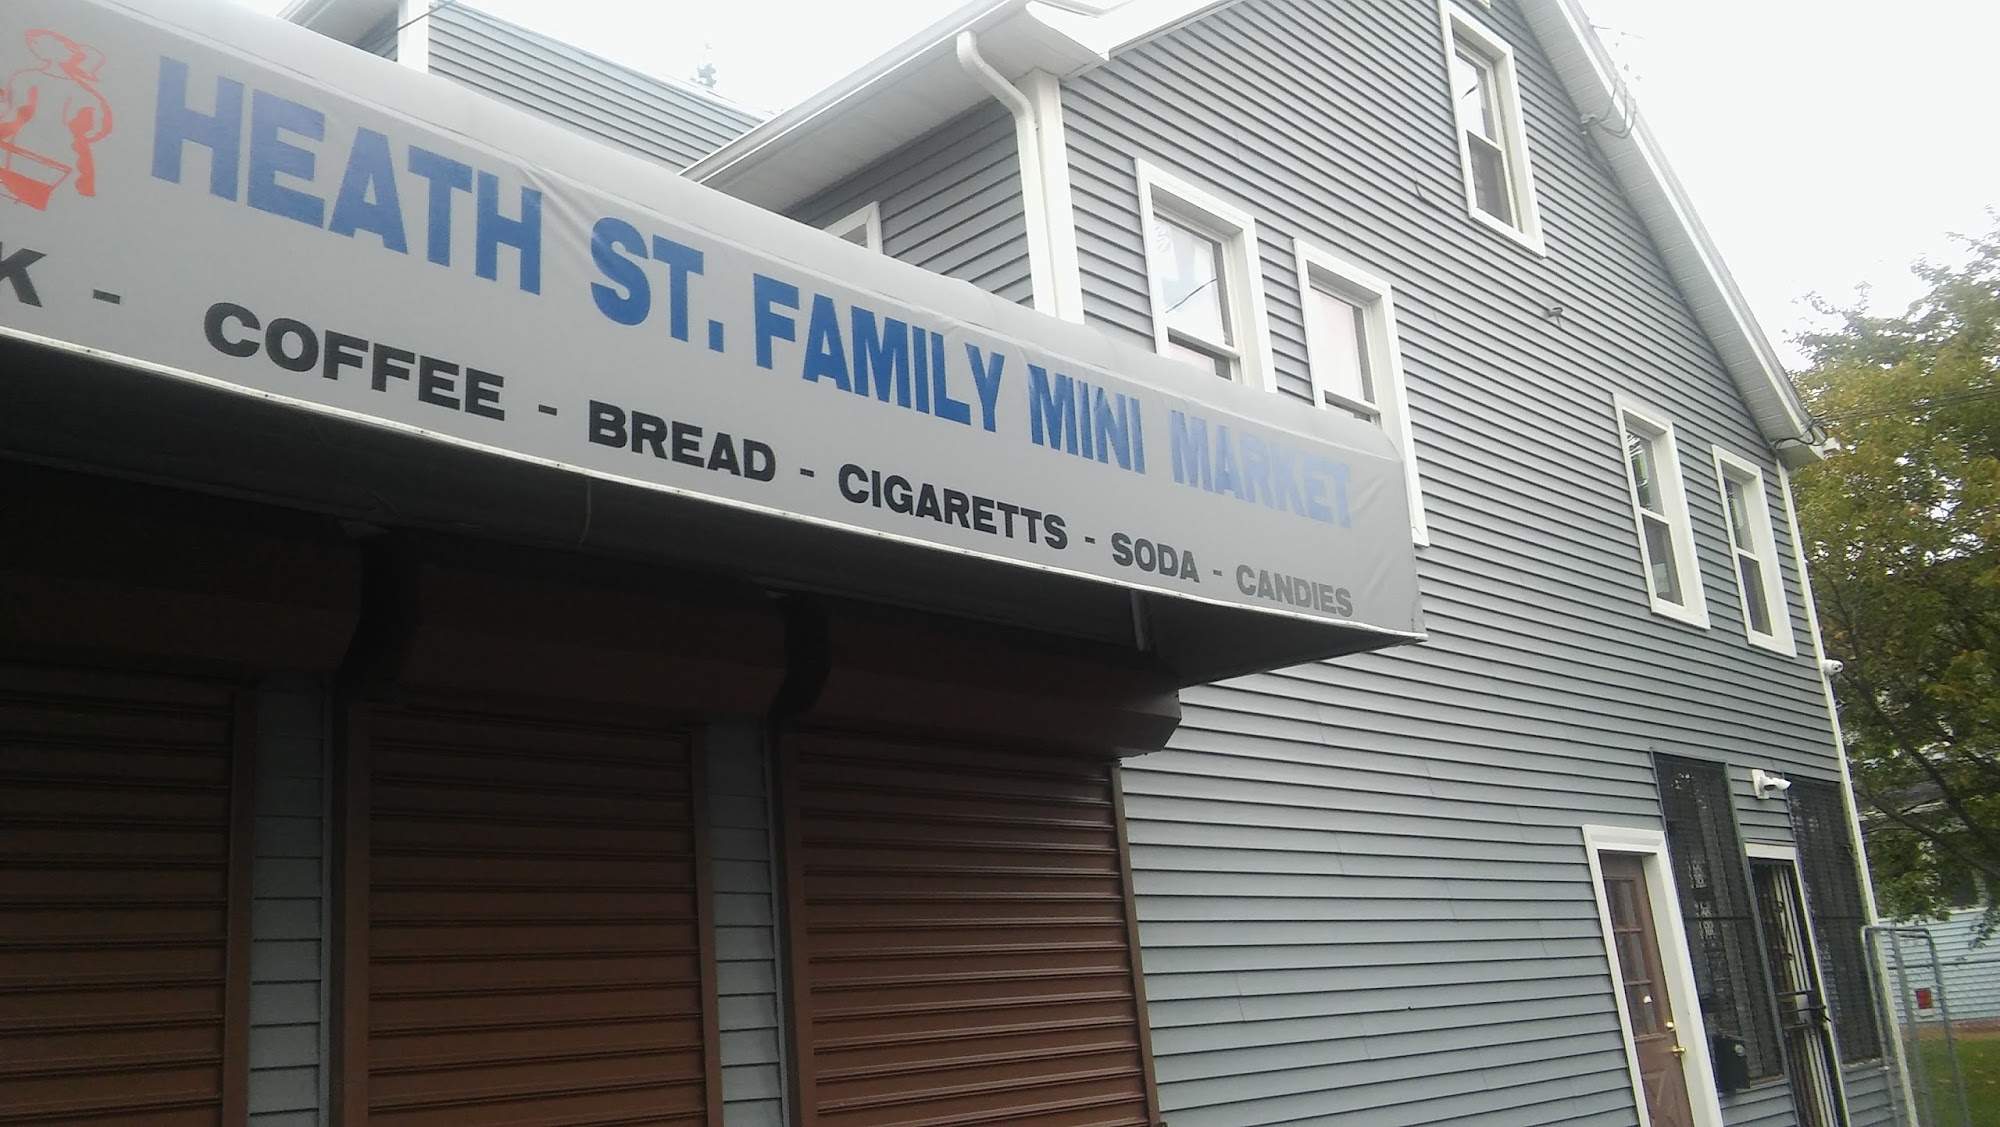 Heath St. Family Mini Market